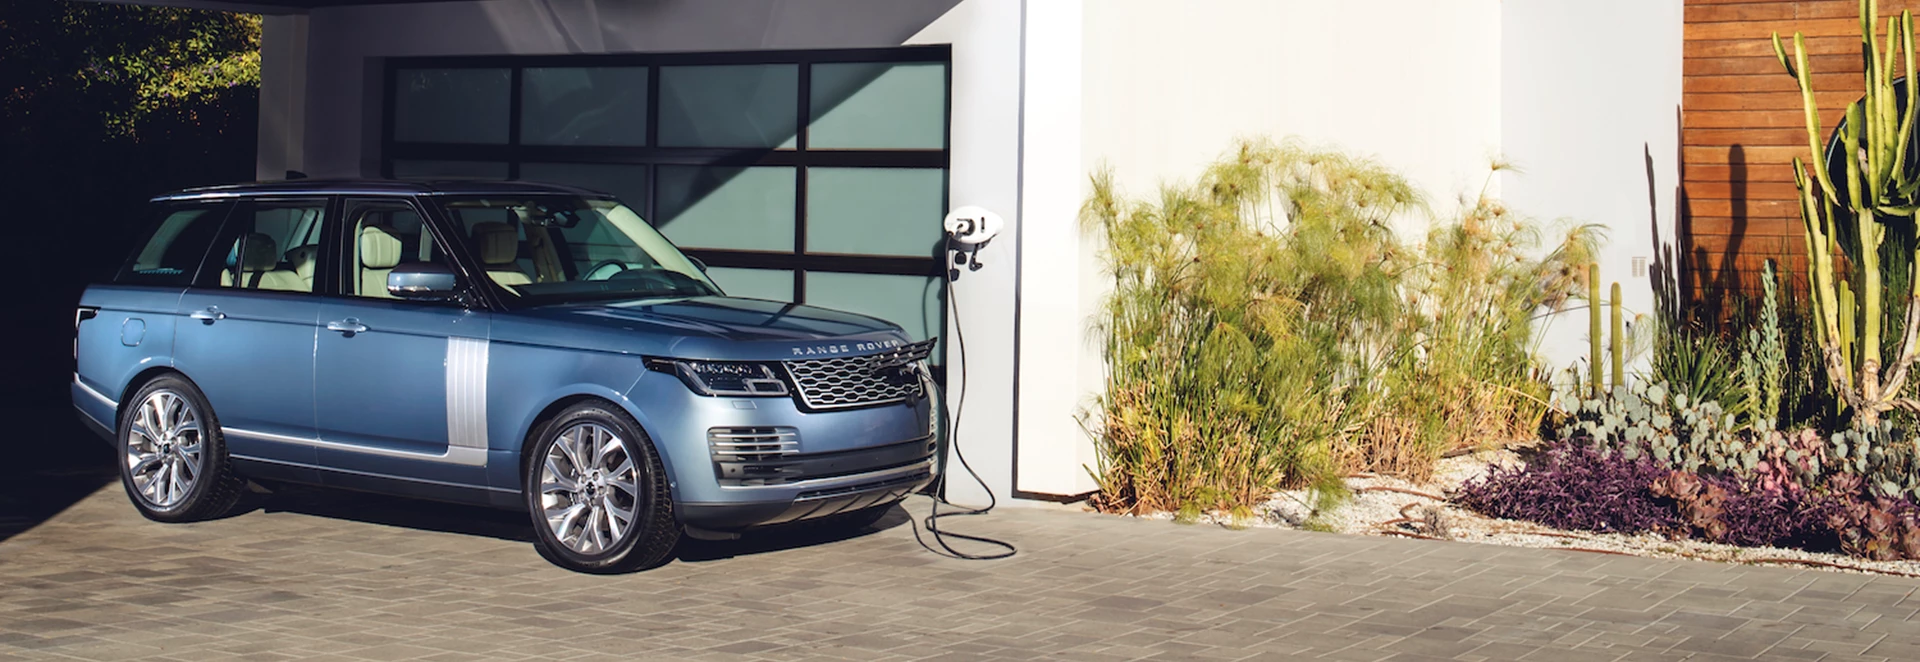 Range Rover PHEV 2019 review